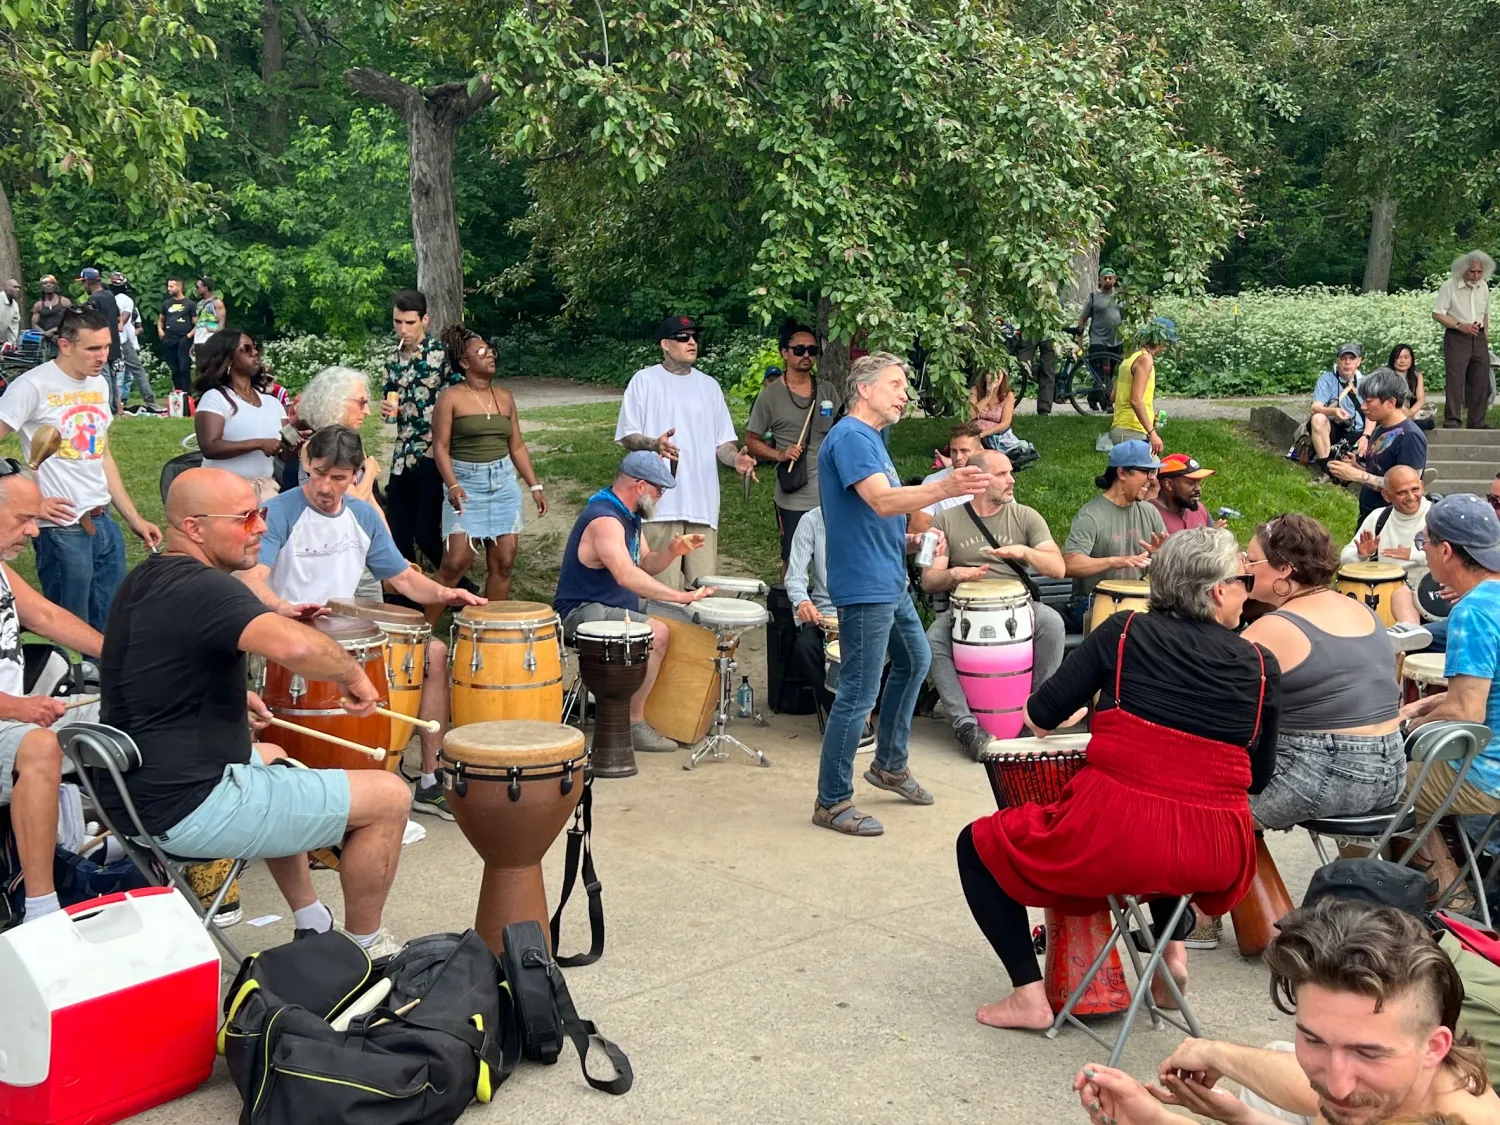 Tam-Tams drum festival. Sundays in Mount Royal park until sunset.